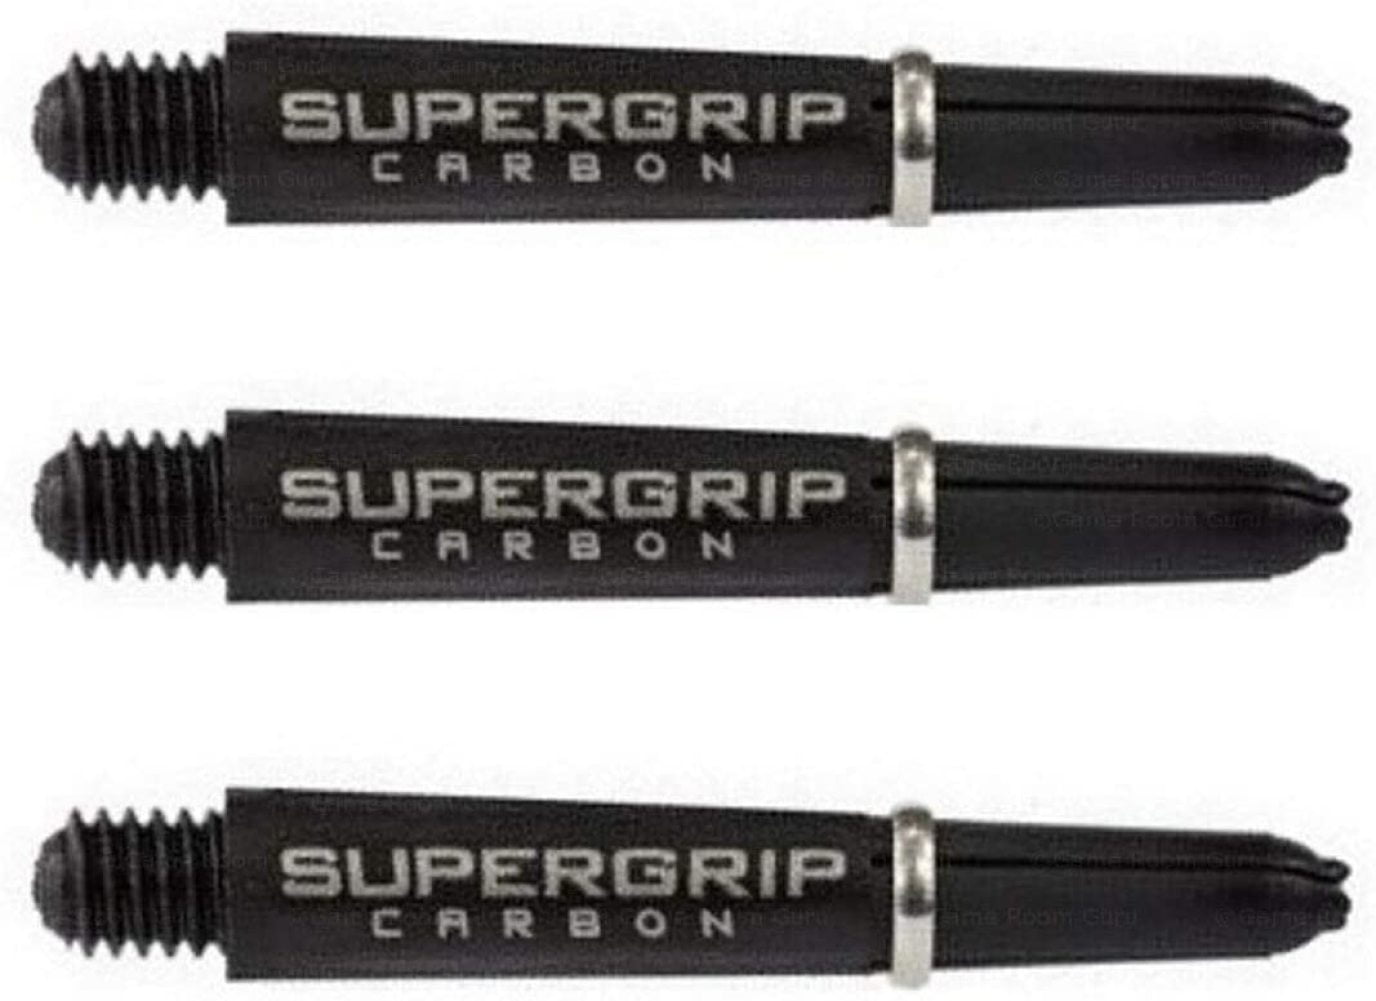 1 New Set Harrows SuperGrip Carbon Extra Strong Dart Shafts Silver Short 